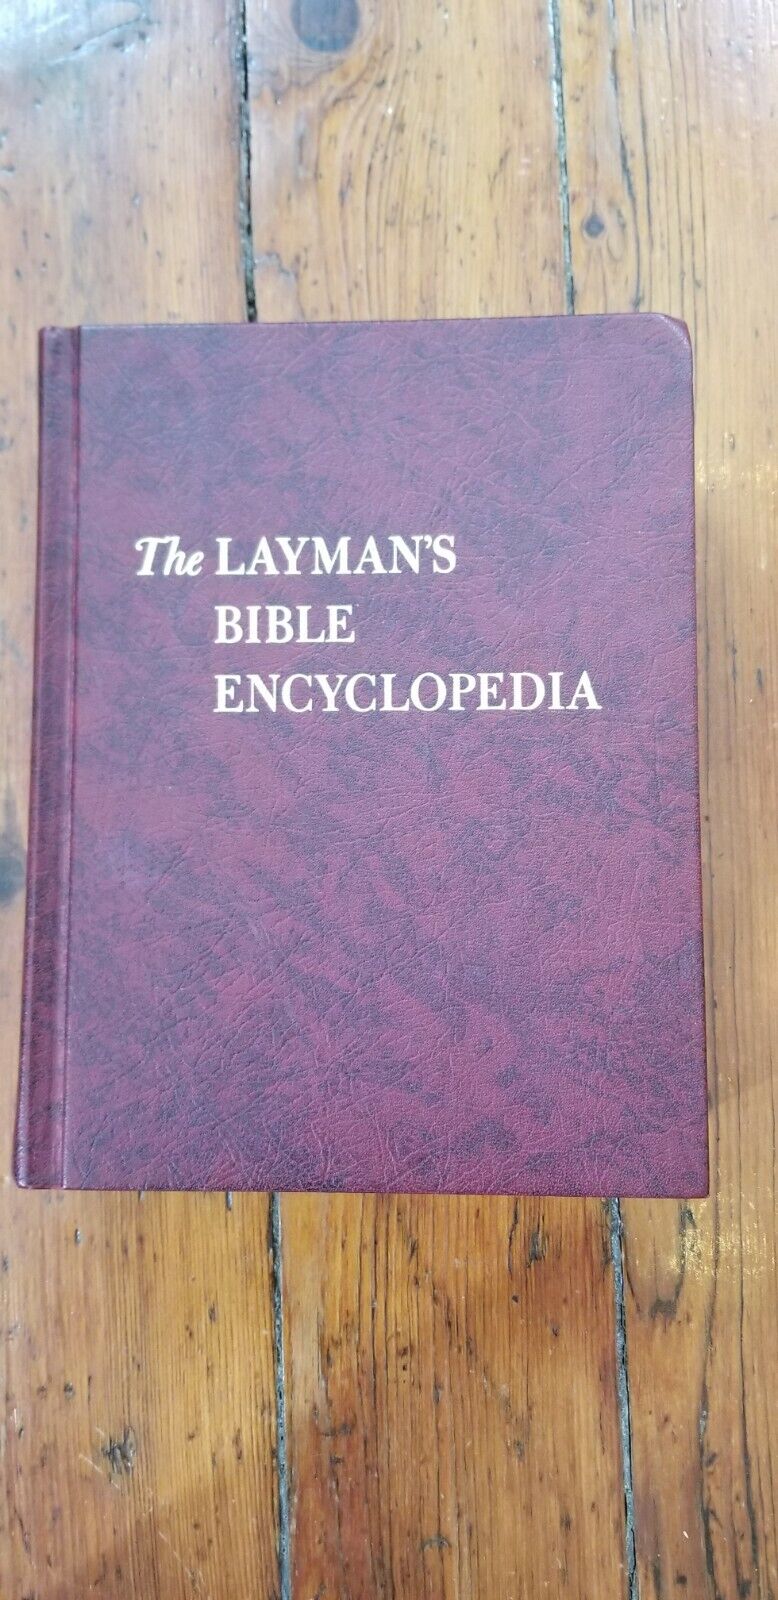 The Layman's Bible Encyclopedia 1964